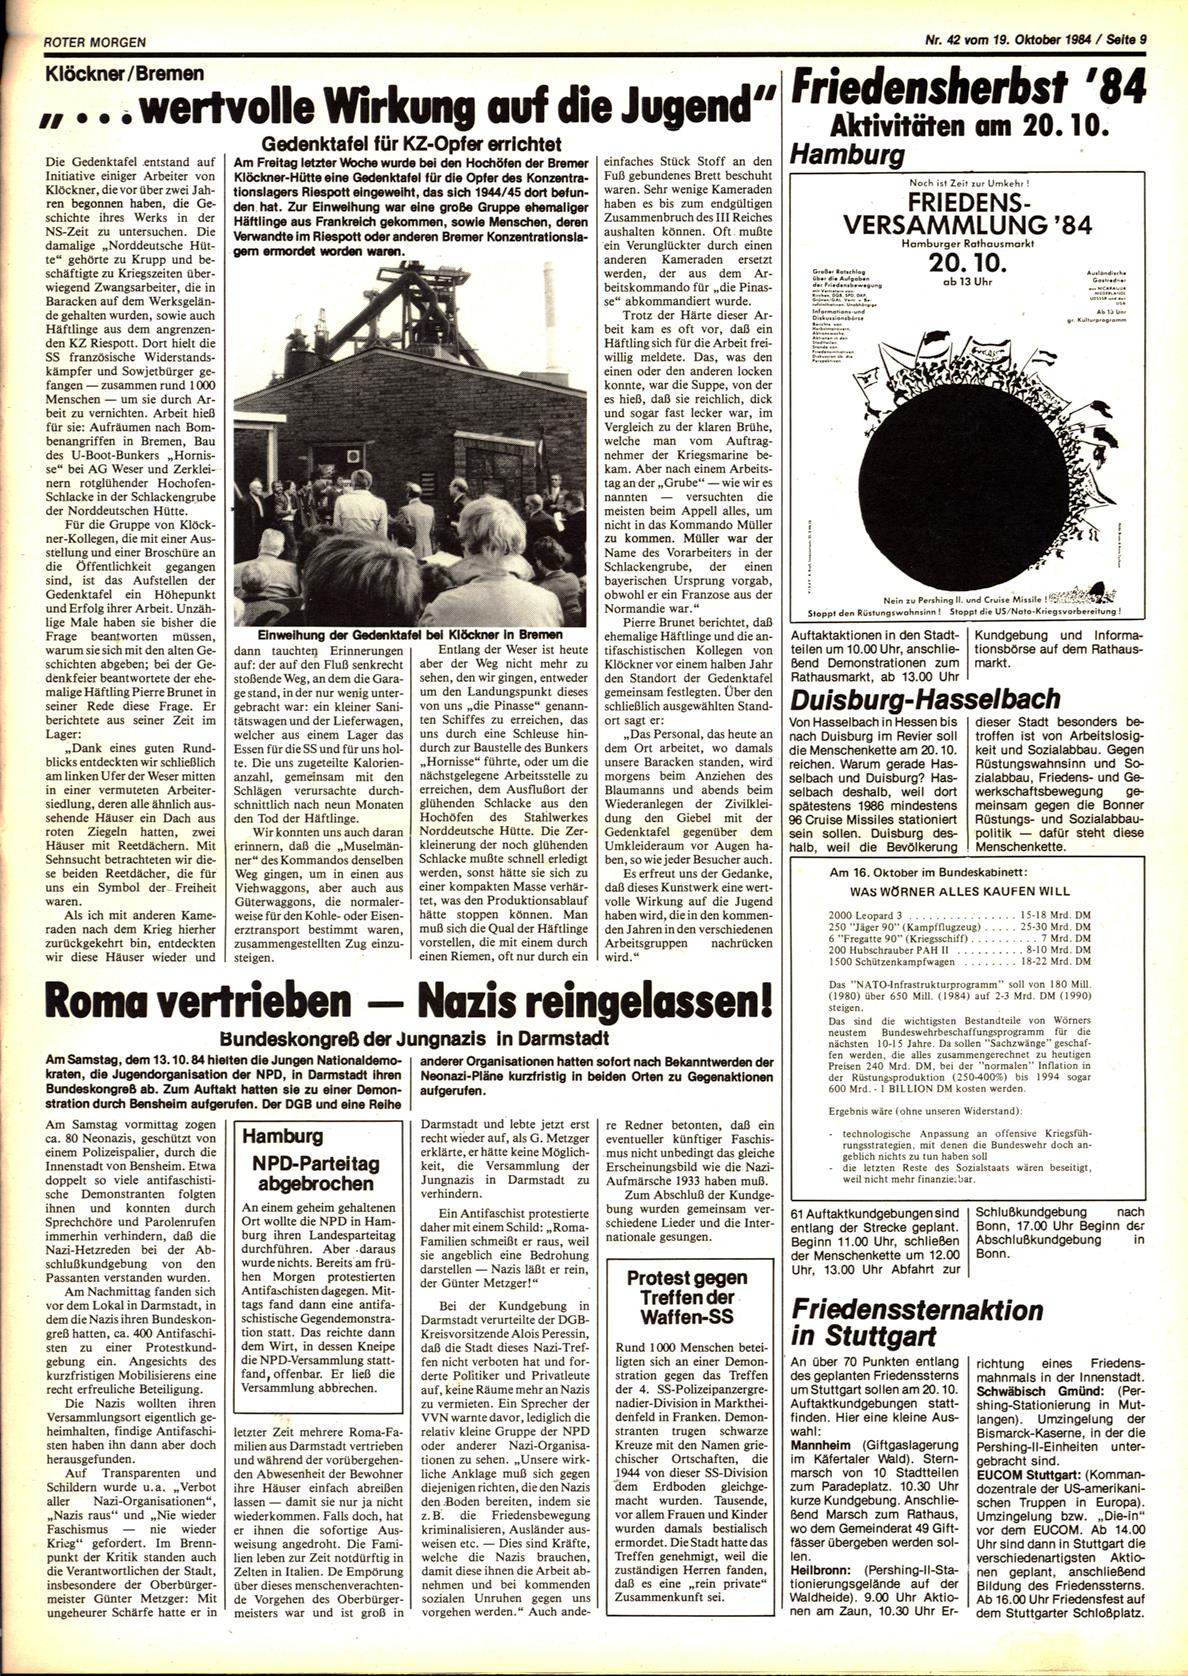 Roter Morgen, 18. Jg., 19. Oktober 1984, Nr. 42, Seite 9